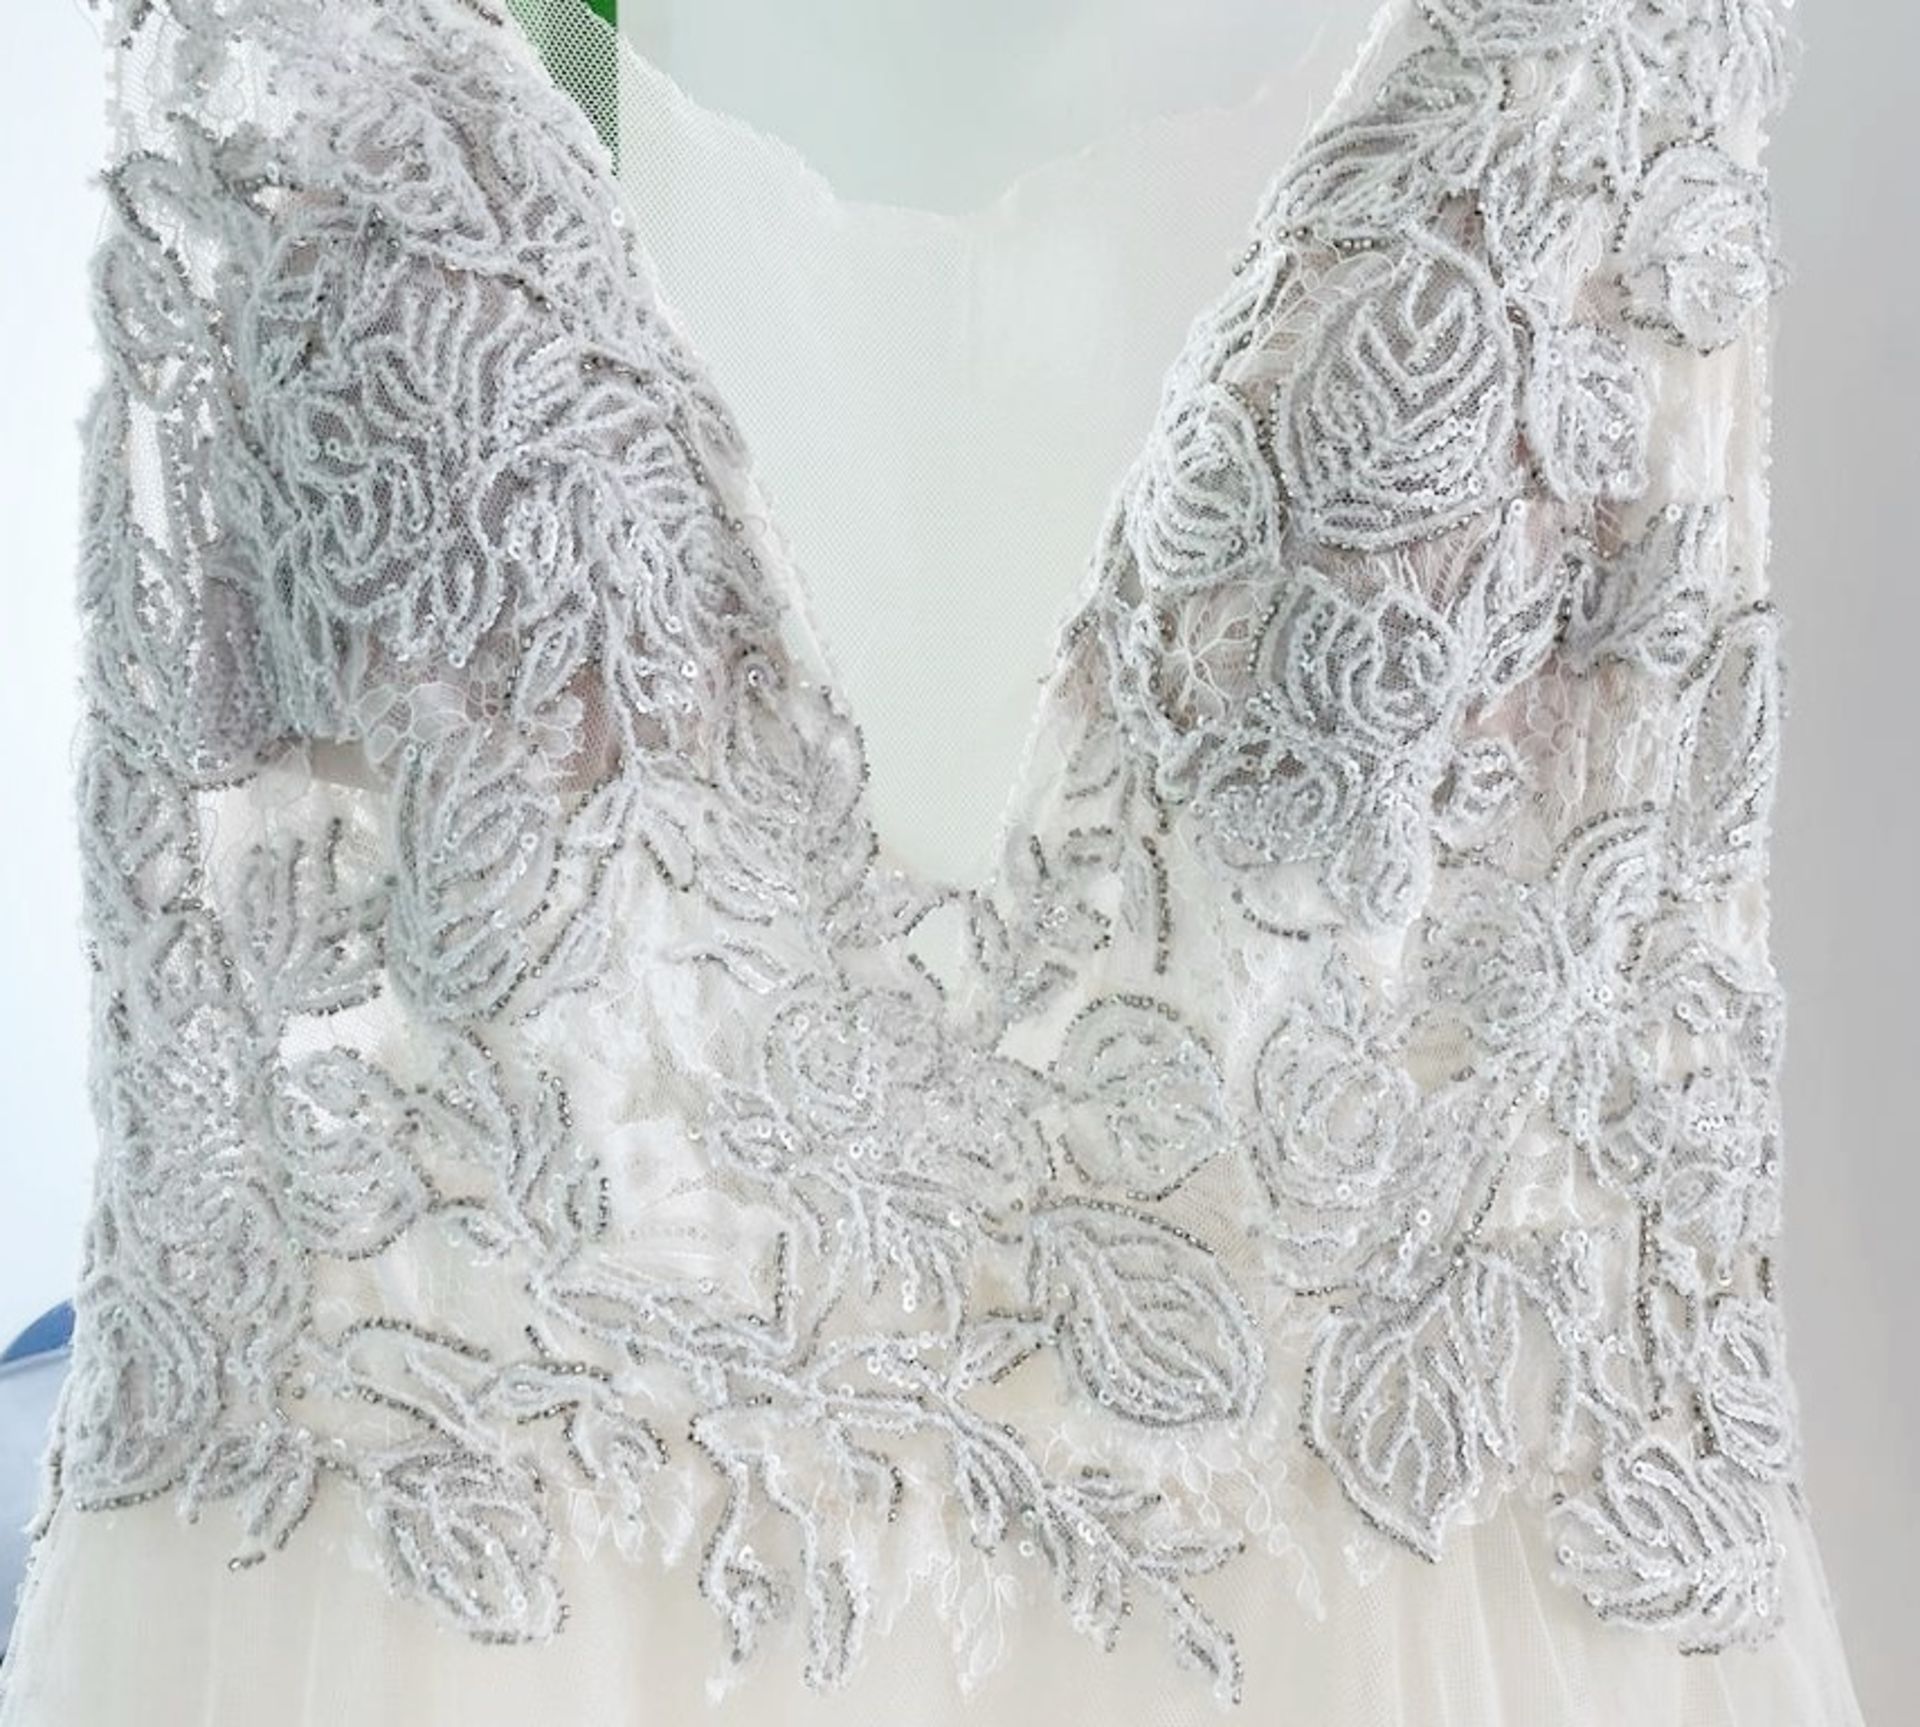 1 x ANNASUL Y 'Cameron' Designer Wedding Dress Bridal Gown - Size: UK 12 - Ref: DRS043 - CL823 - - Image 6 of 13